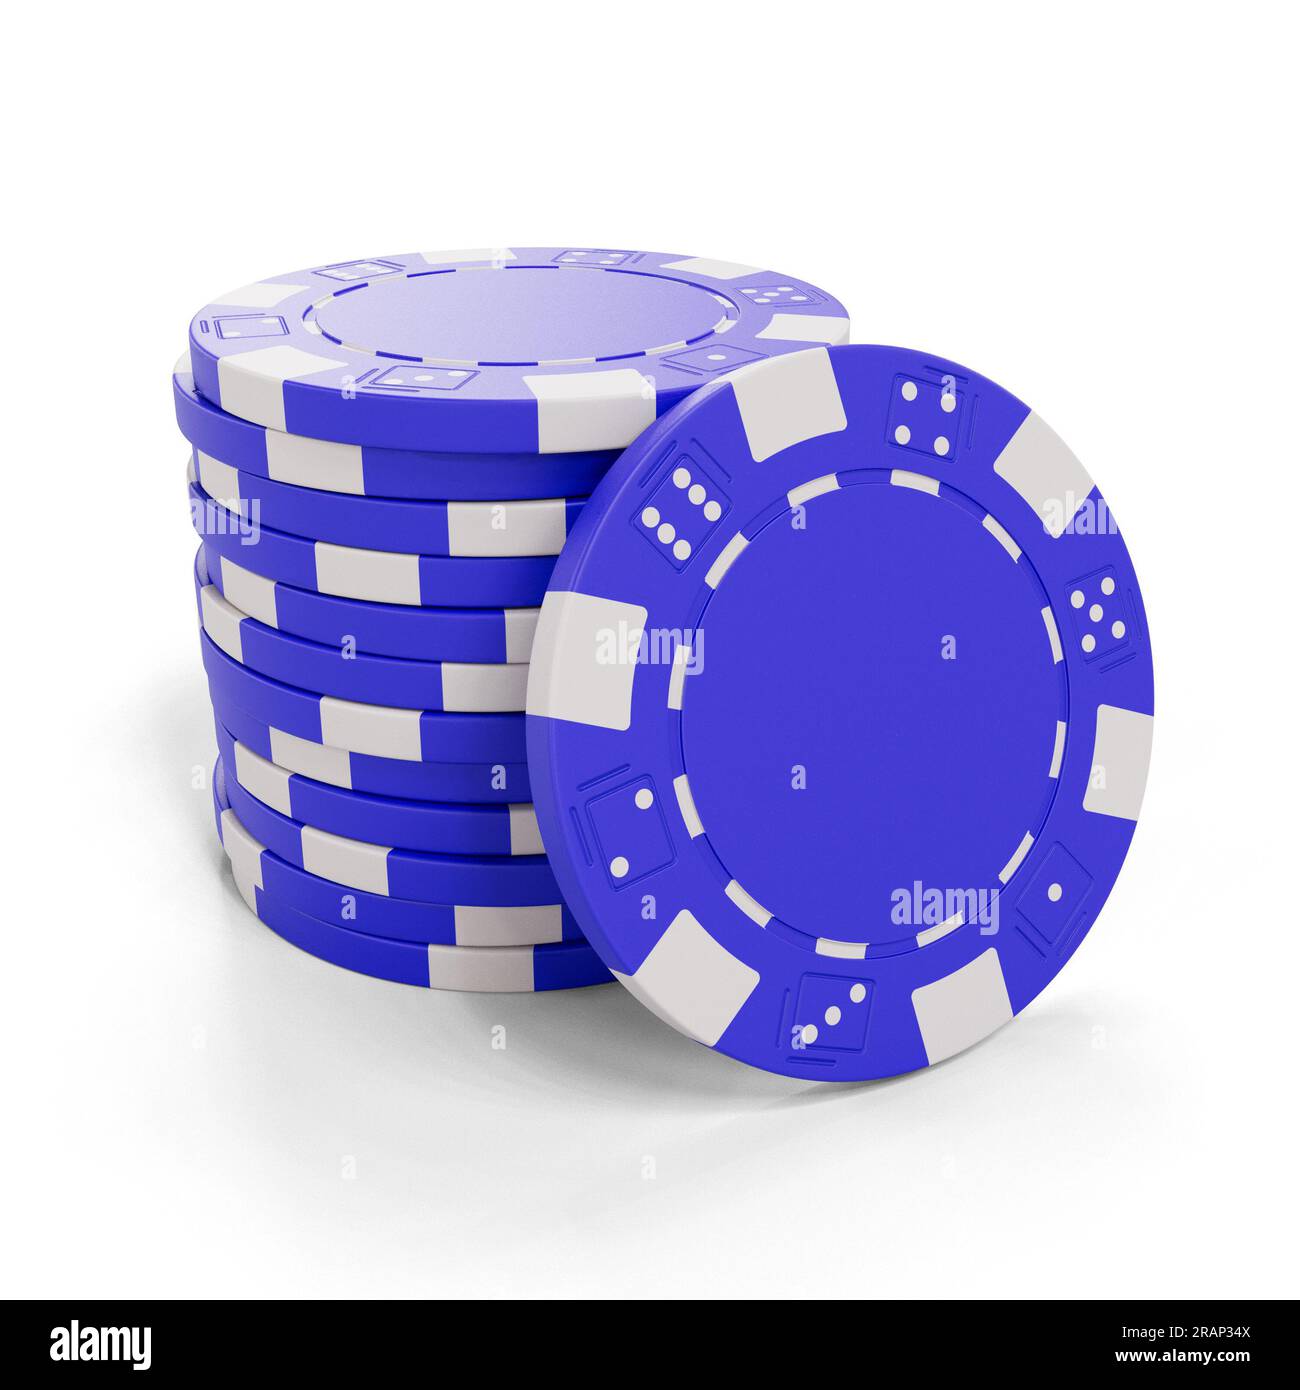 Casino illustration concept Stock Photo